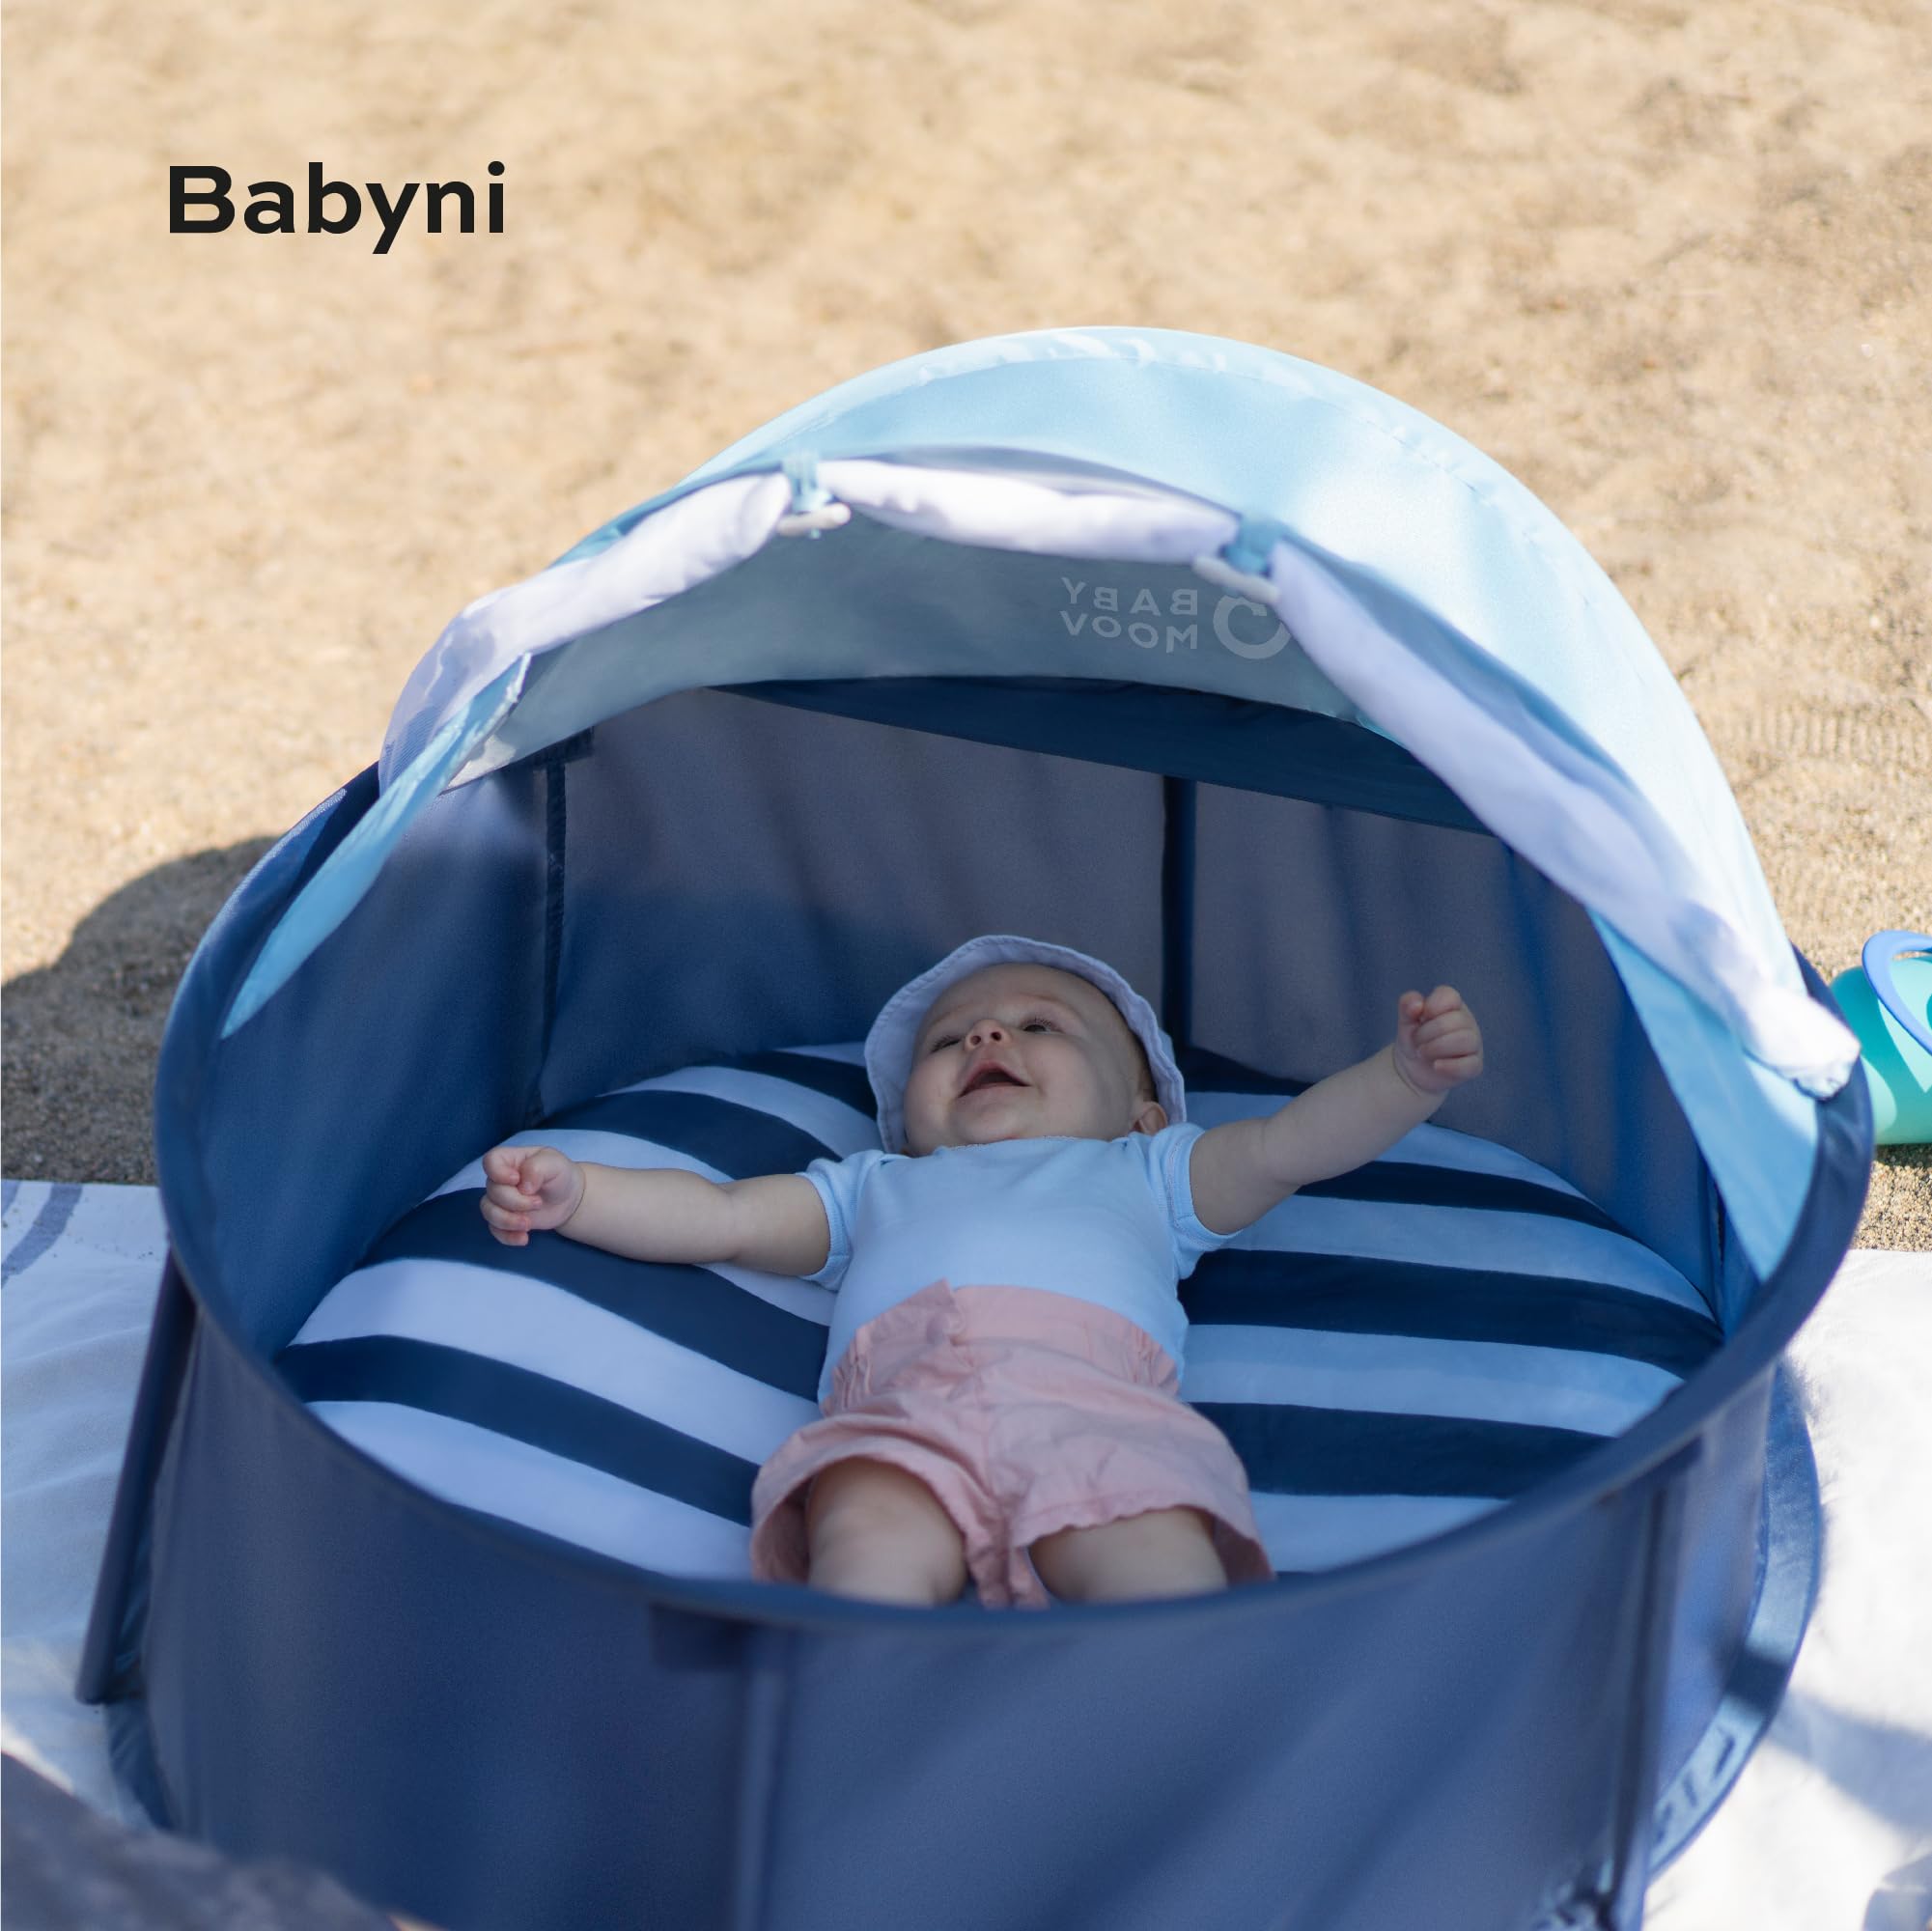 Babymoov Babyni Premium Baby Dome | Pop-Up Indoor & Outdoor Play Tent for Babies, Marine